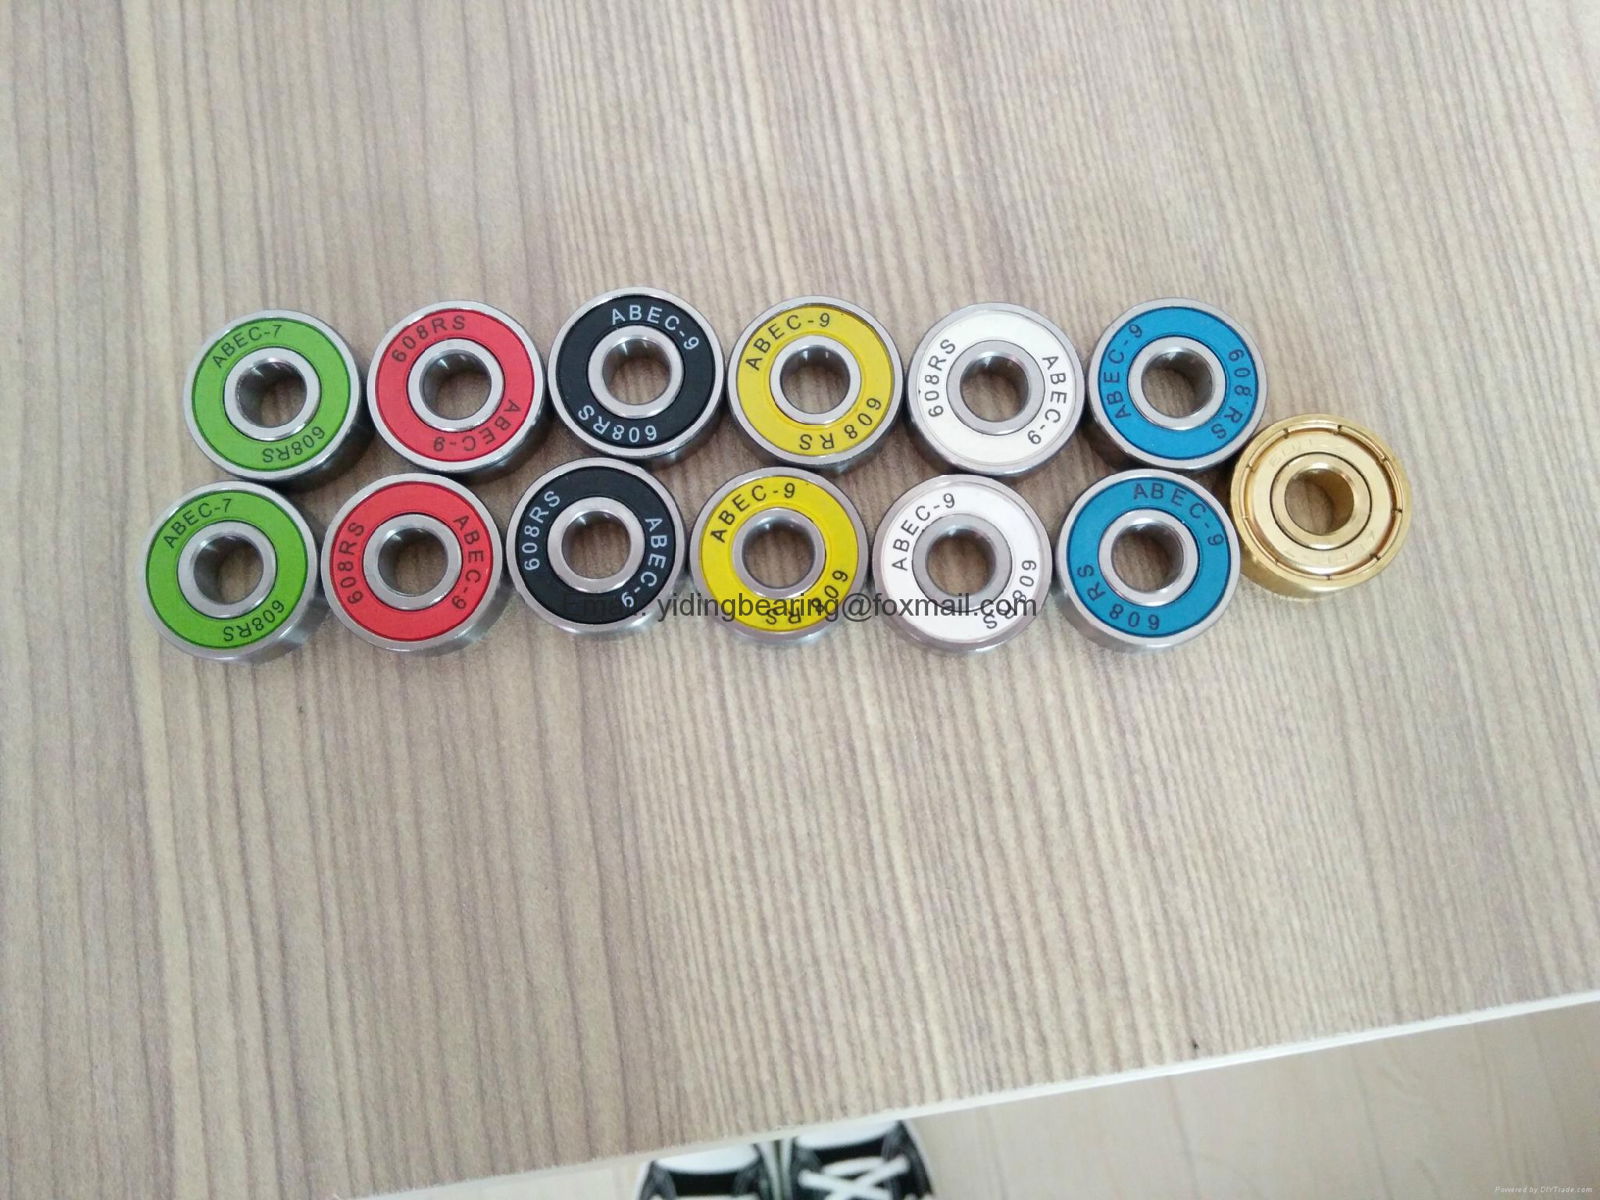 ABEC9 608 bearing for hand spinner fidget toy